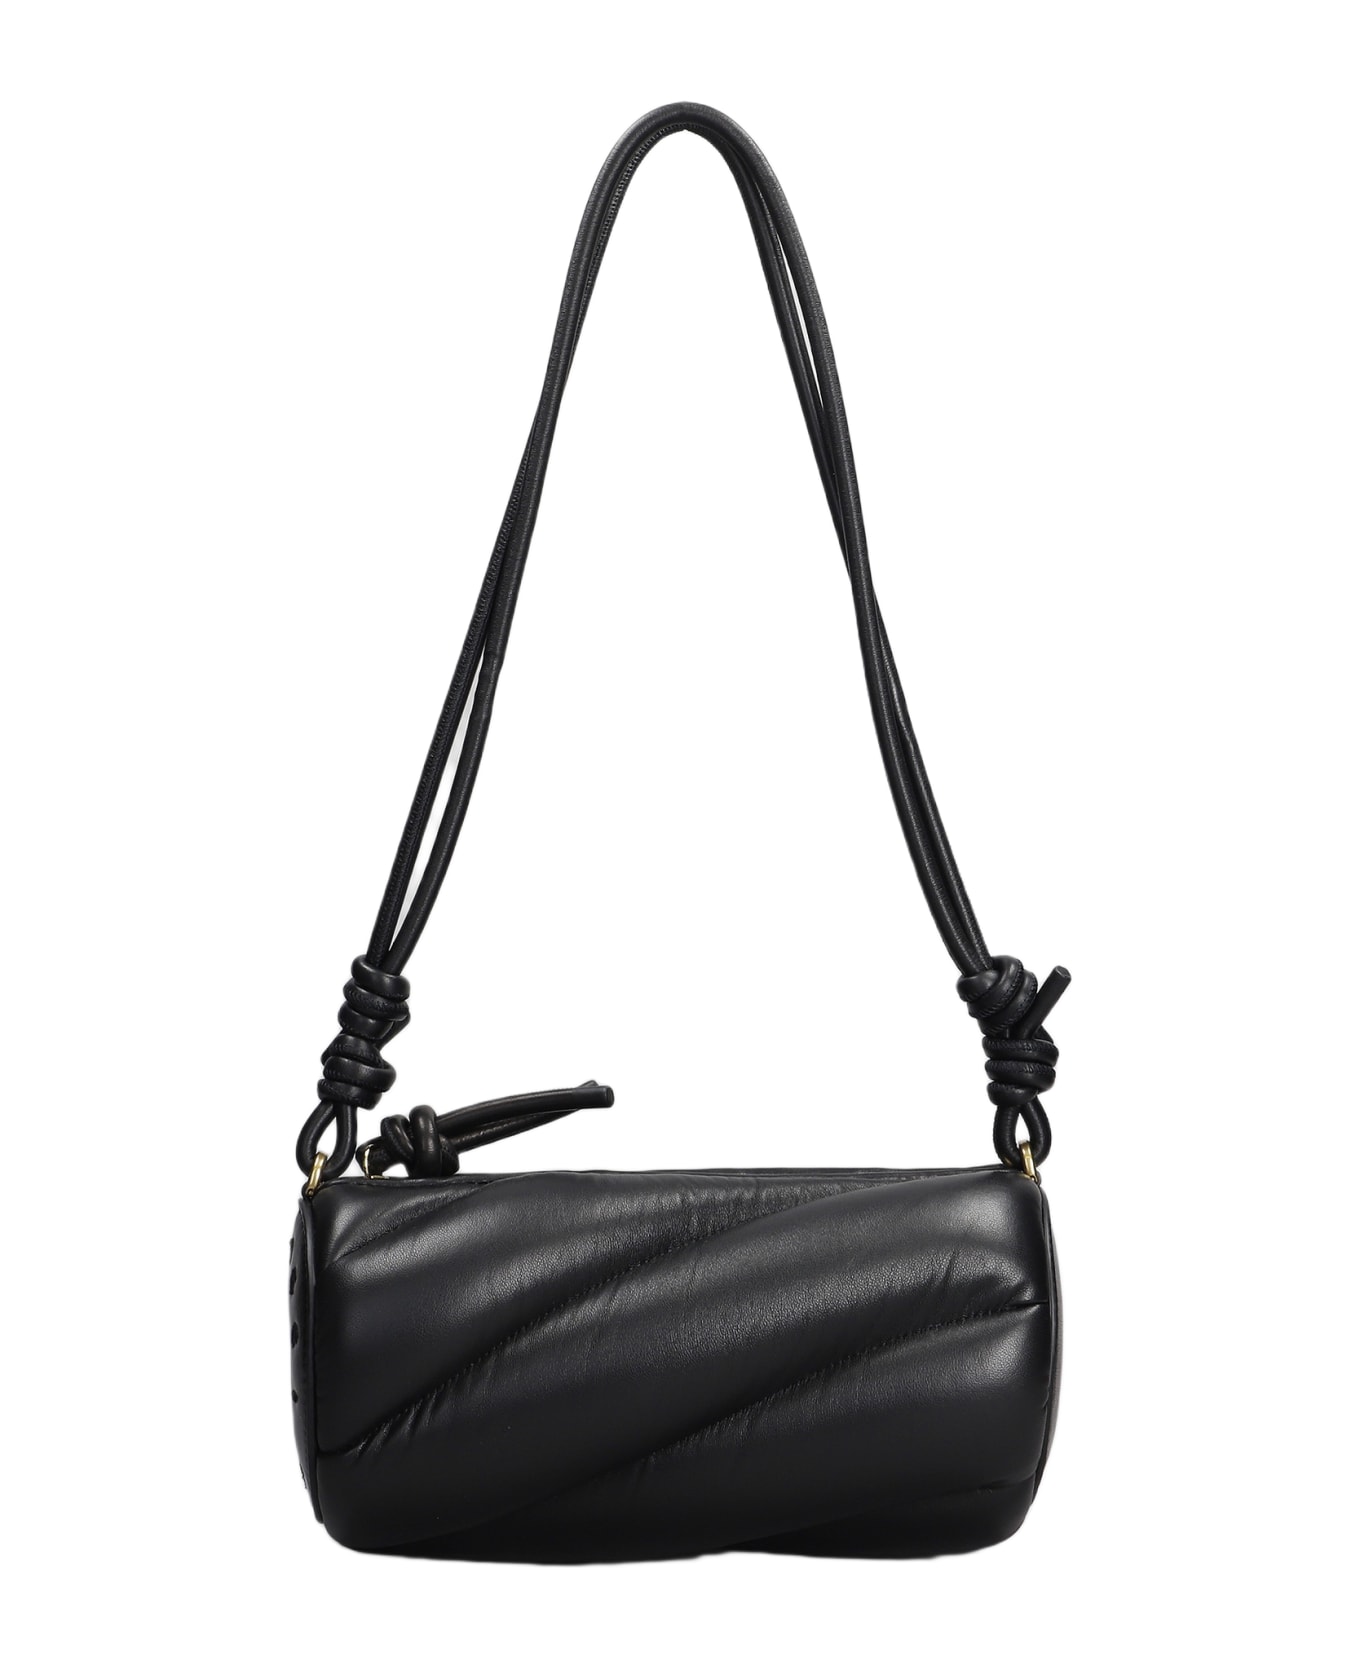 Fiorucci Mella Bag Shoulder Bag In Black Leather - Nero